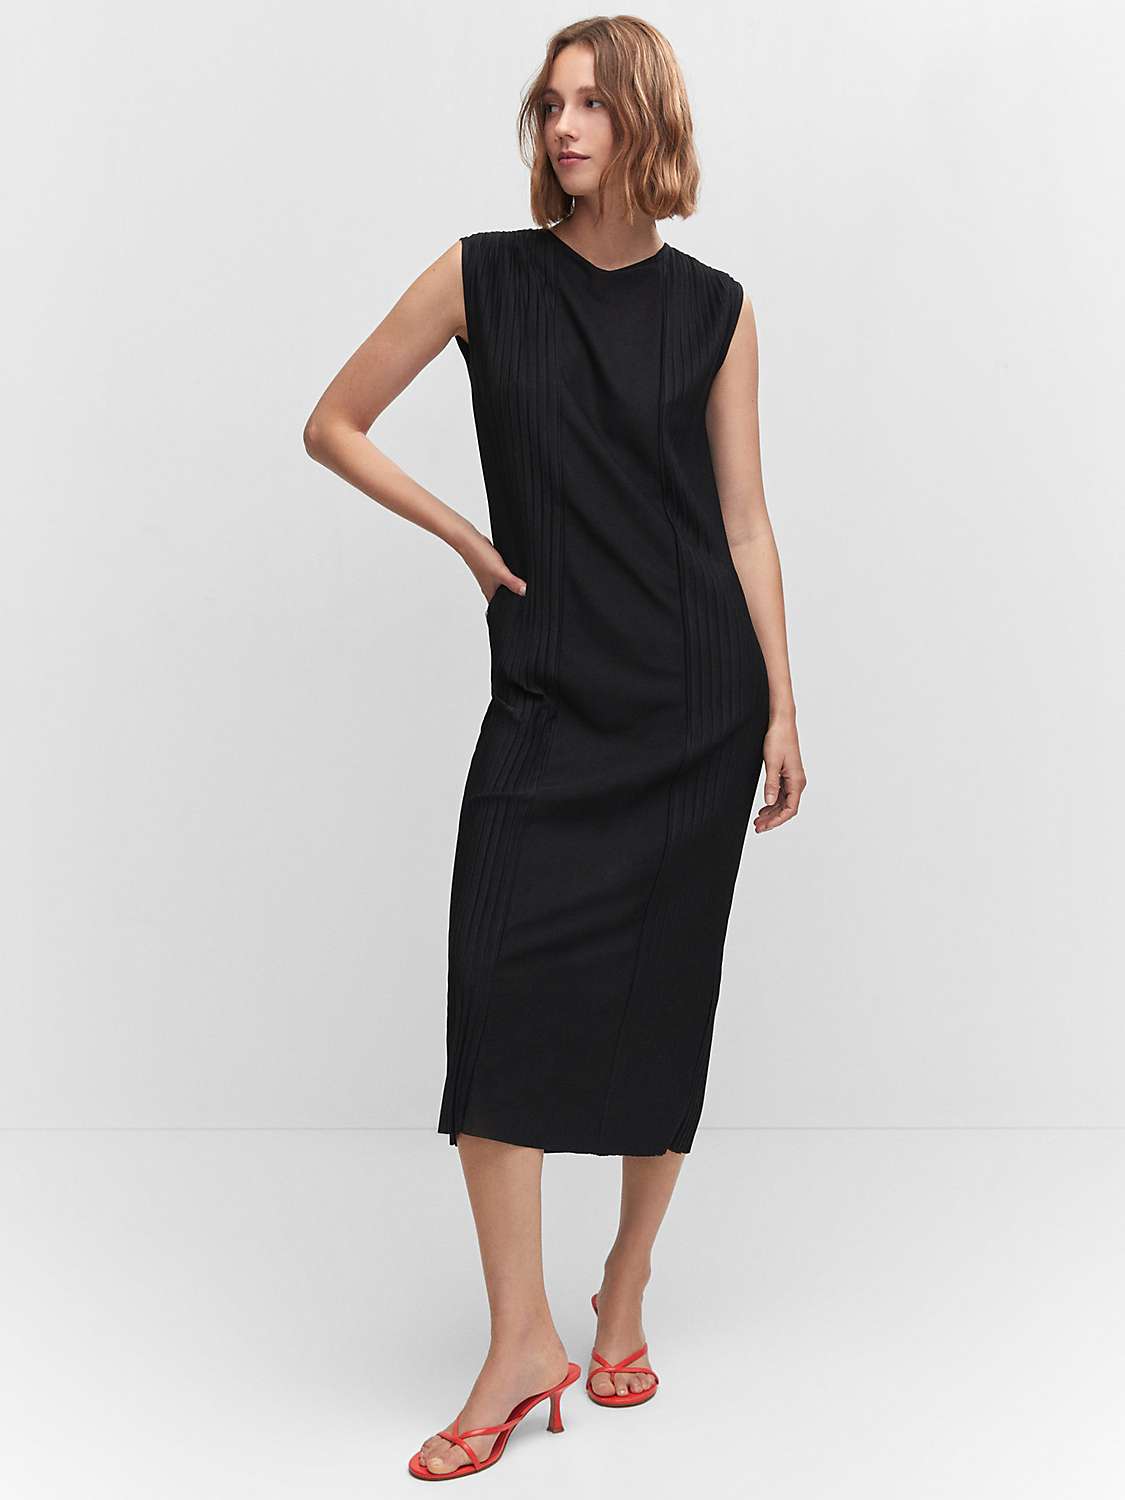 Mango Pleat Detail Midi Dress, Black at John Lewis & Partners